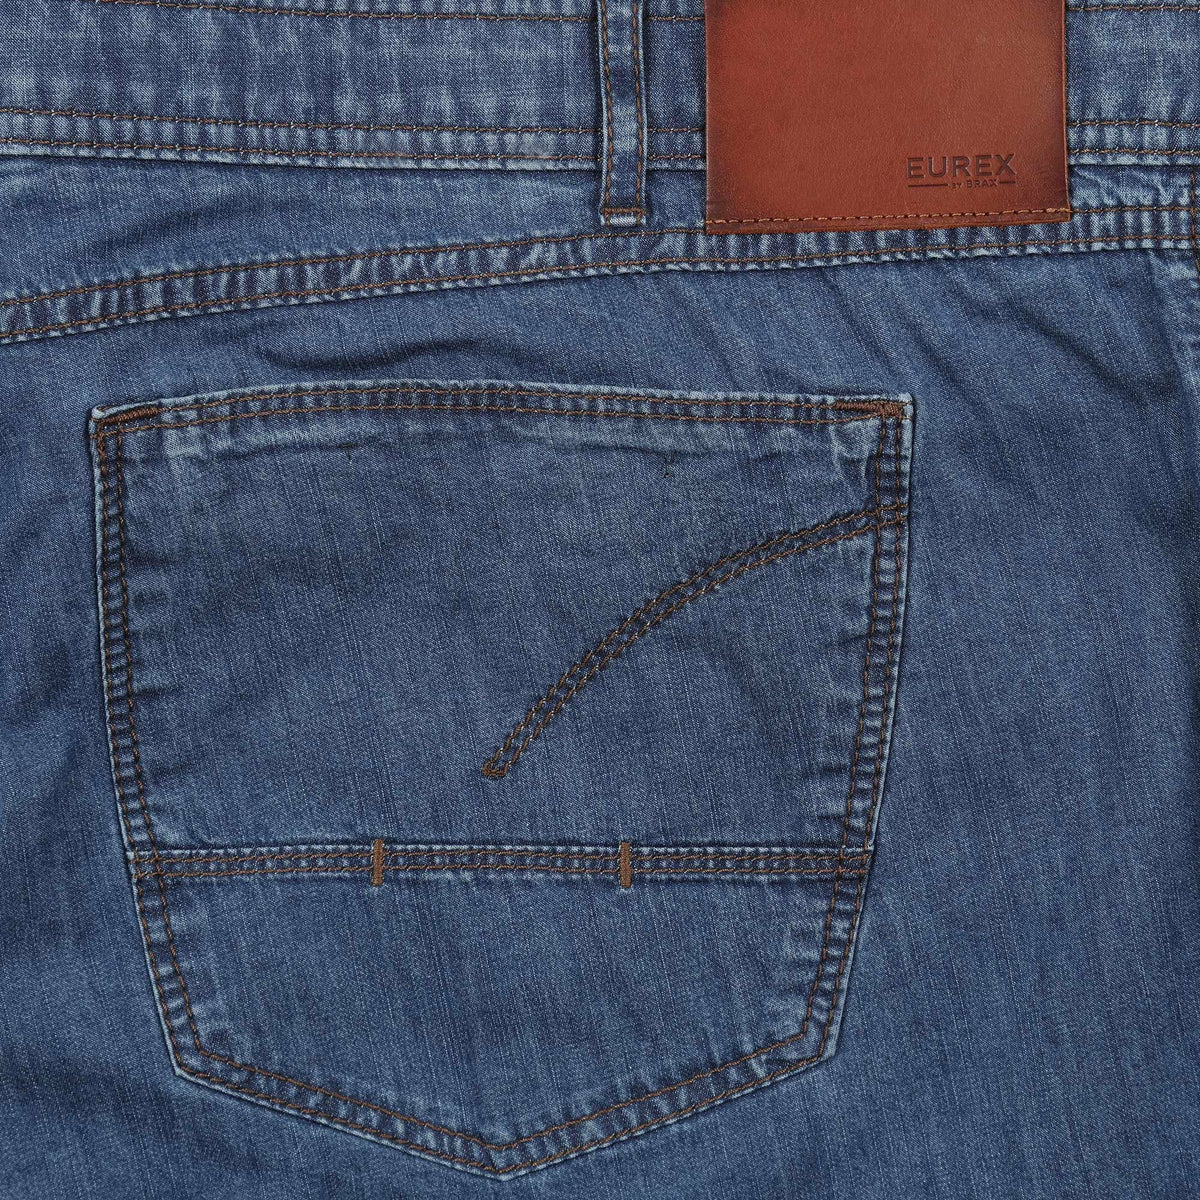 Eurex Denim &quot;Ken&quot; Jeans in Dark Denim - Big Mens Clothing by Ron Bennett